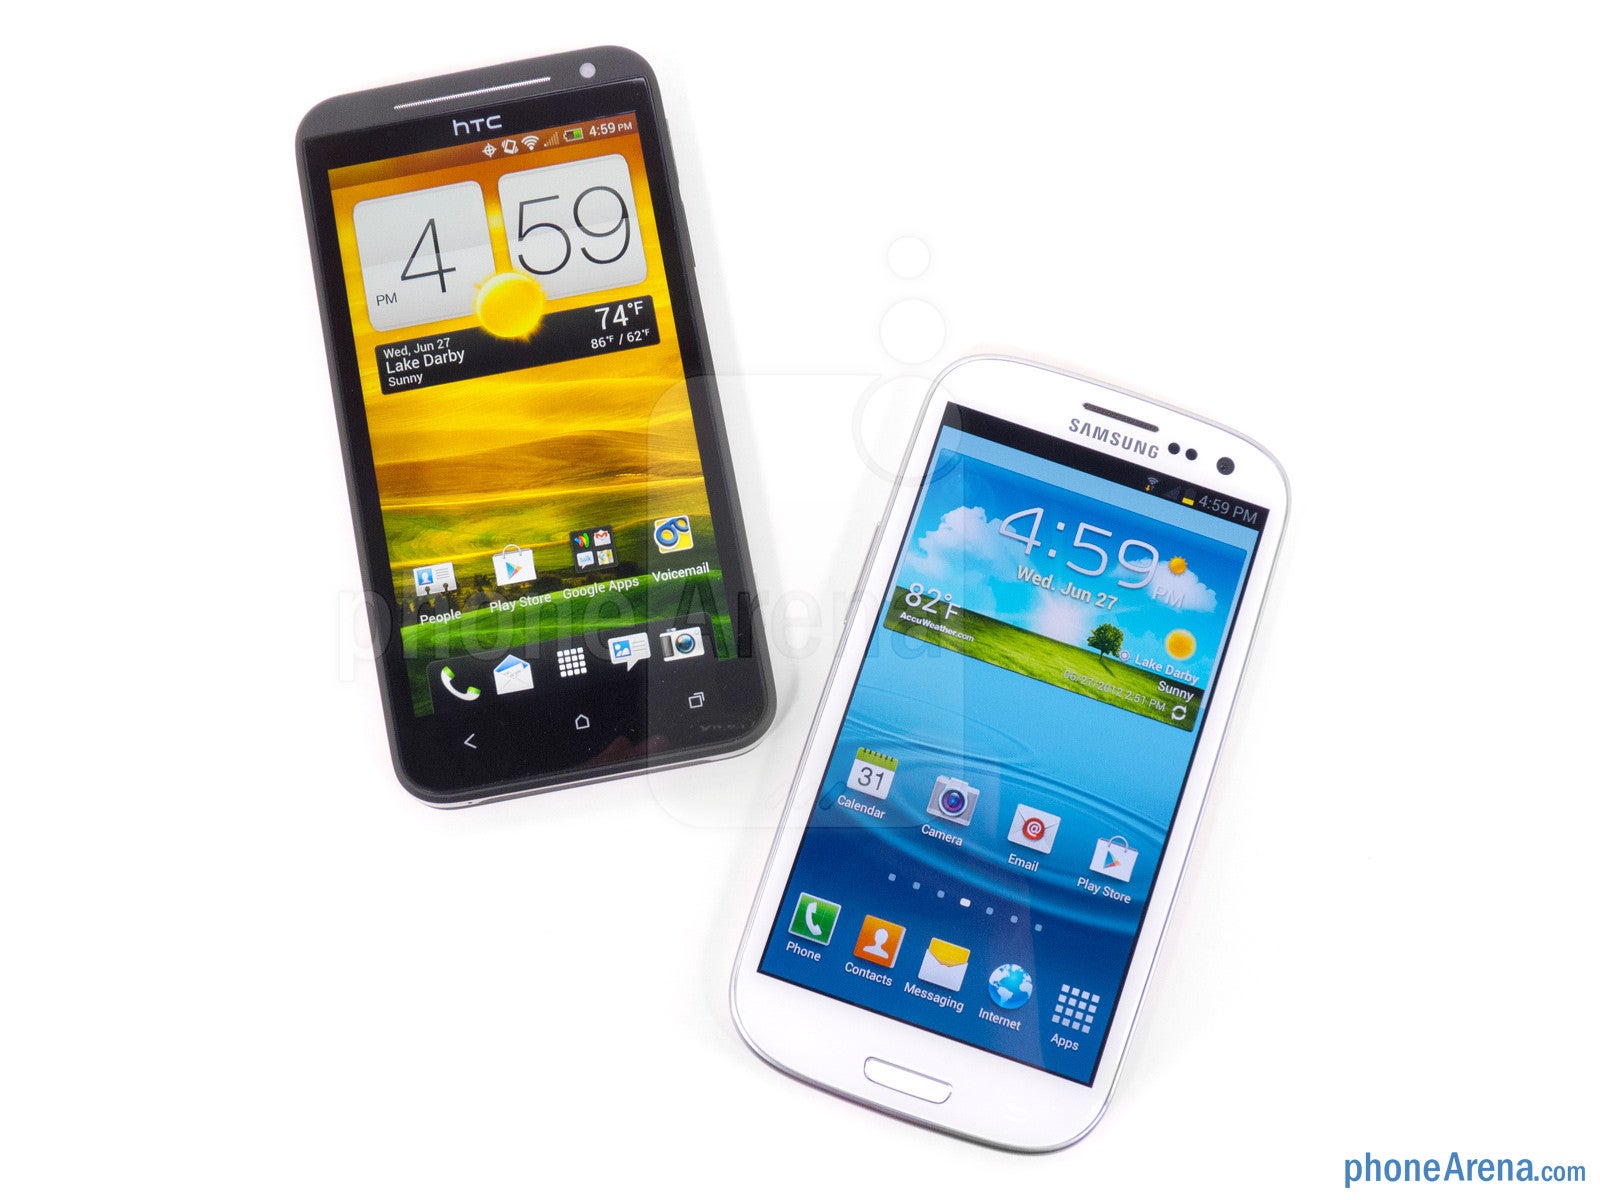 Samsung Galaxy S III vs HTC EVO 4G LTE